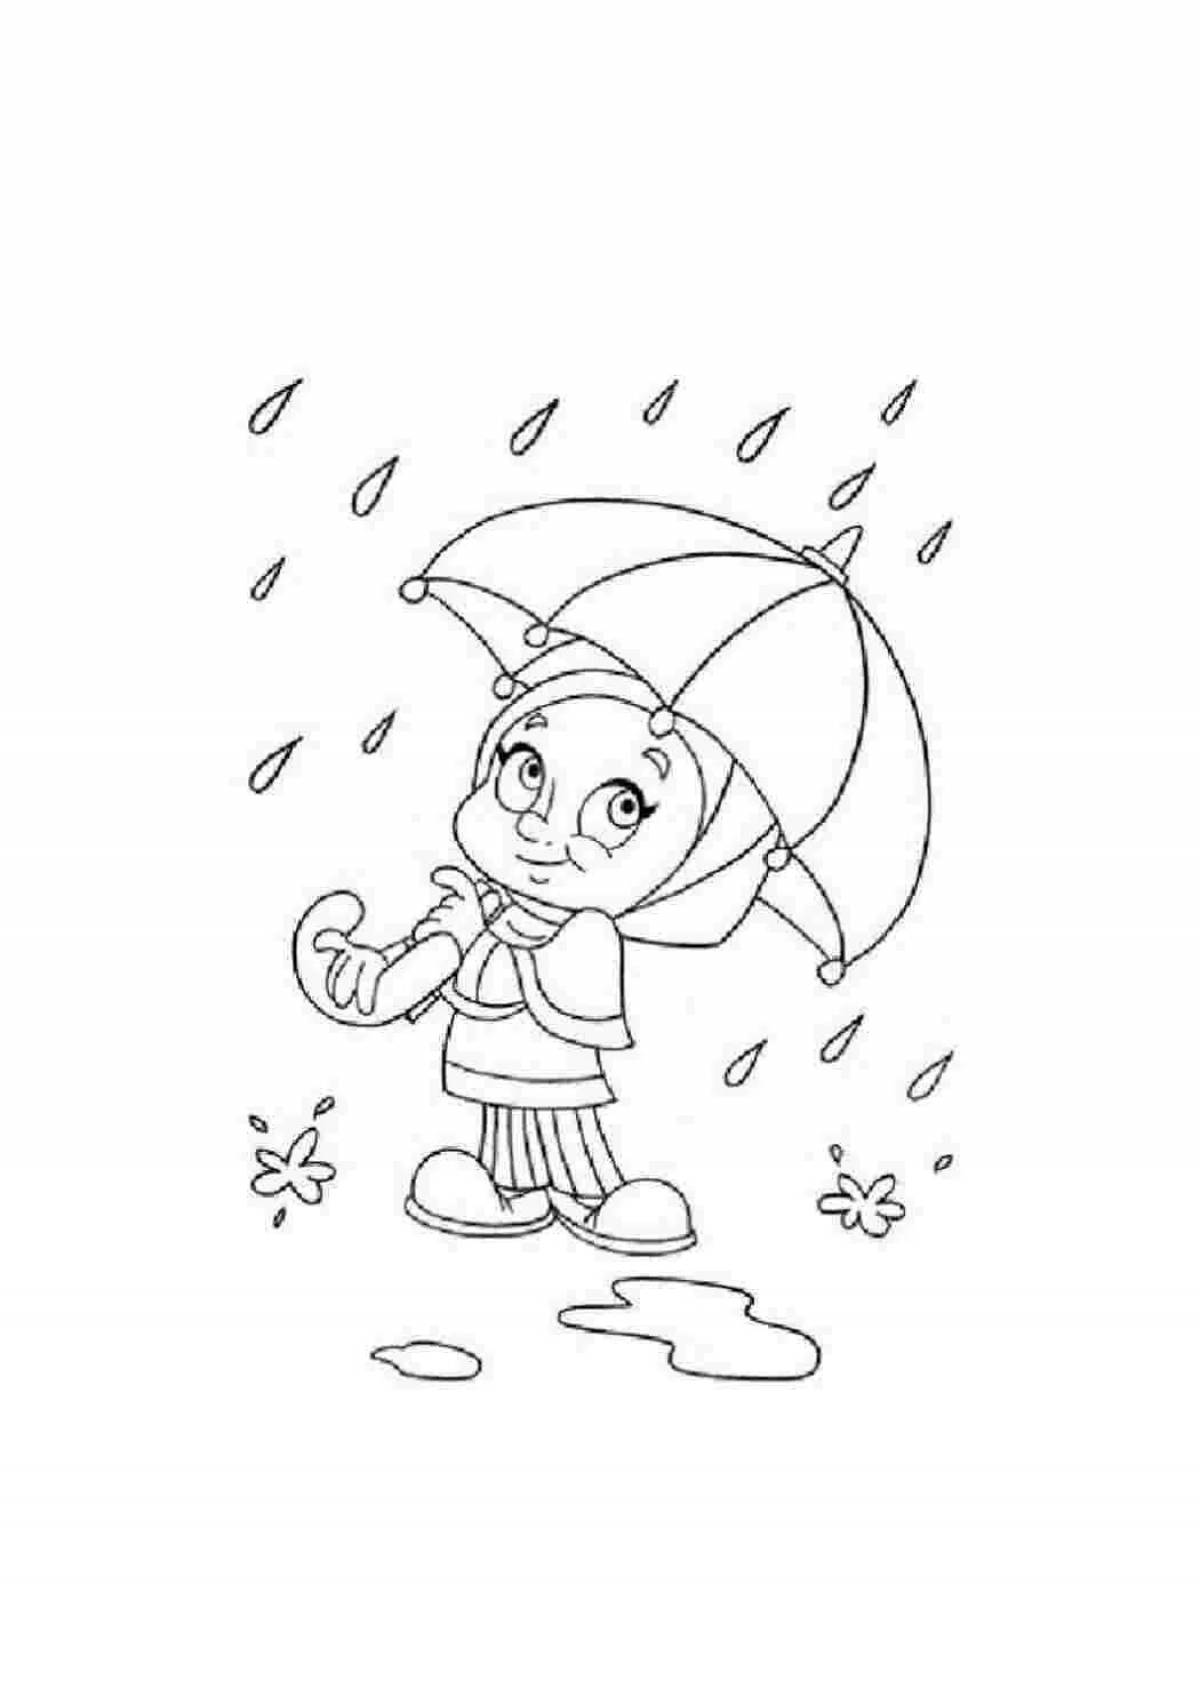 Girl with umbrella #1